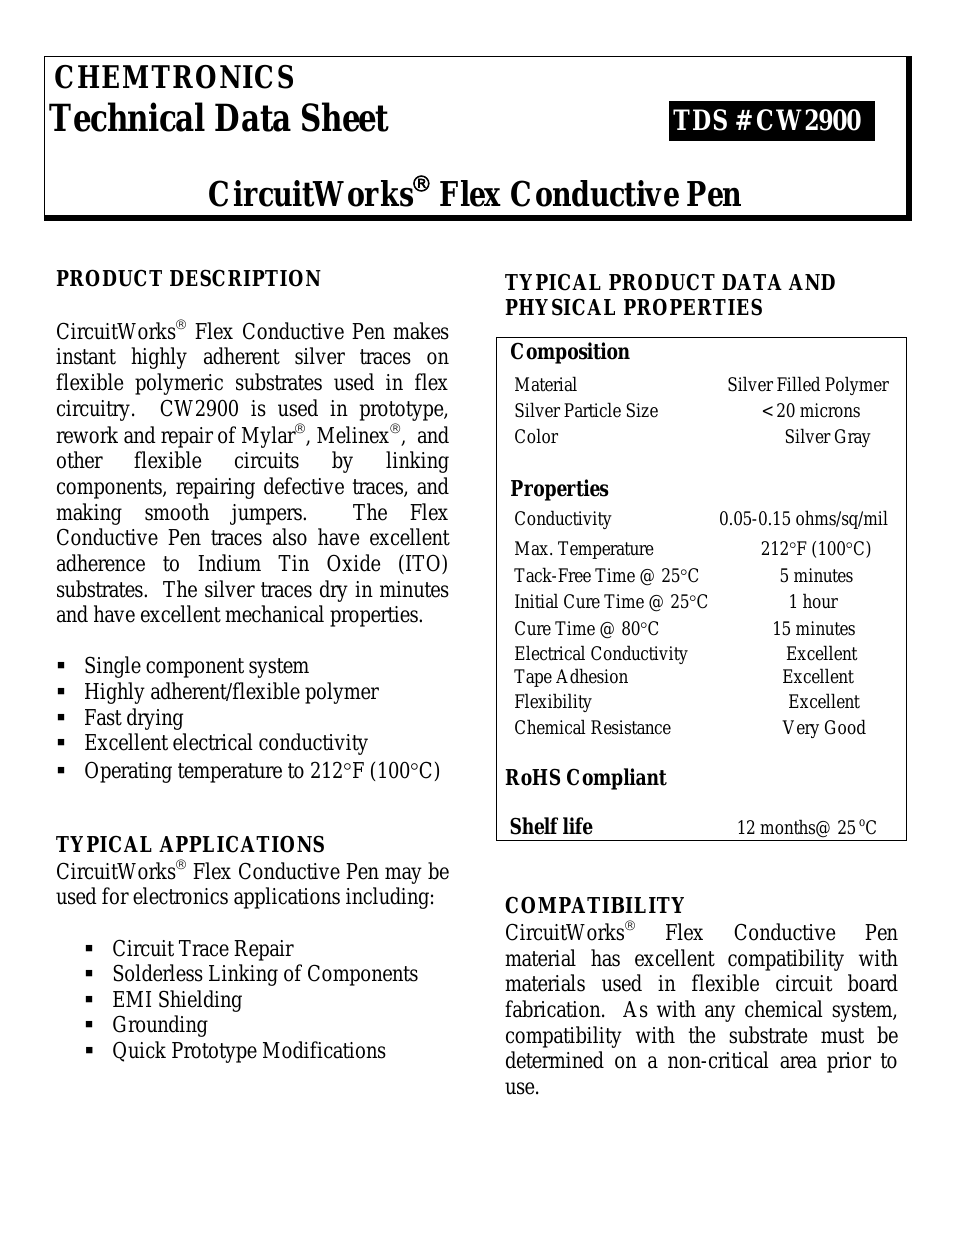 CircuitWorks® Flex Conductive Pen CW2900